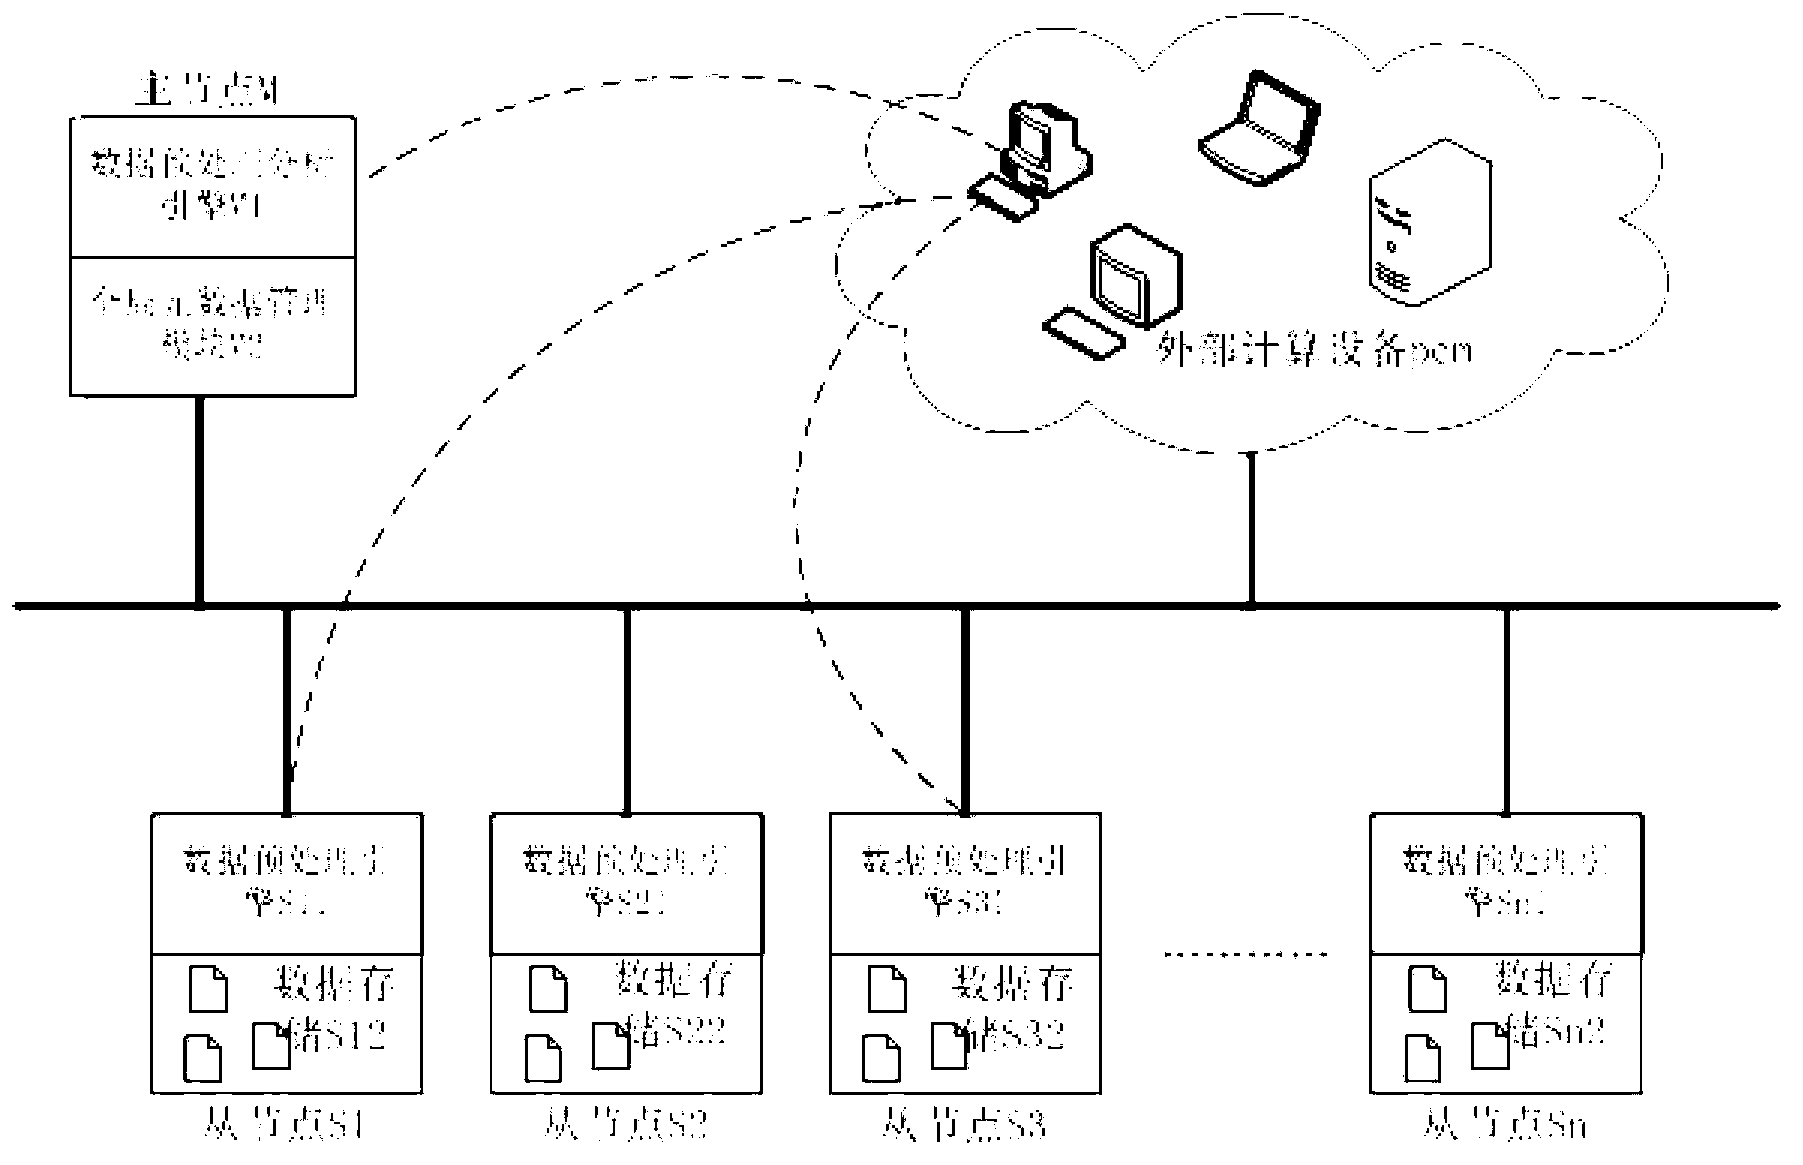 Intelligent data service method based on distributed system